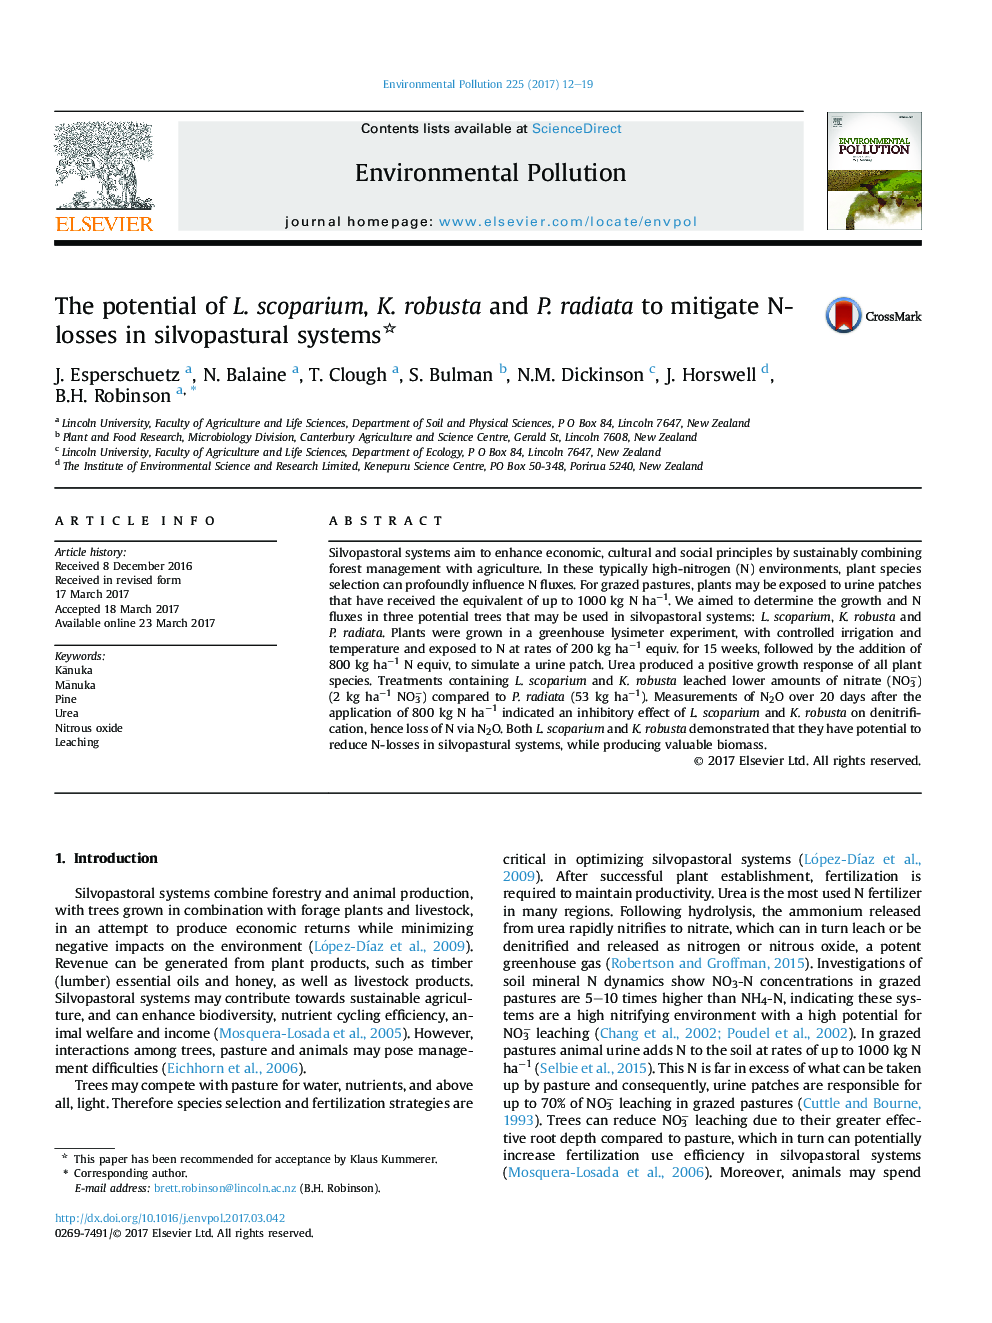 The potential of L.Â scoparium, K.Â robusta and P.Â radiata to mitigate N-losses in silvopastural systems